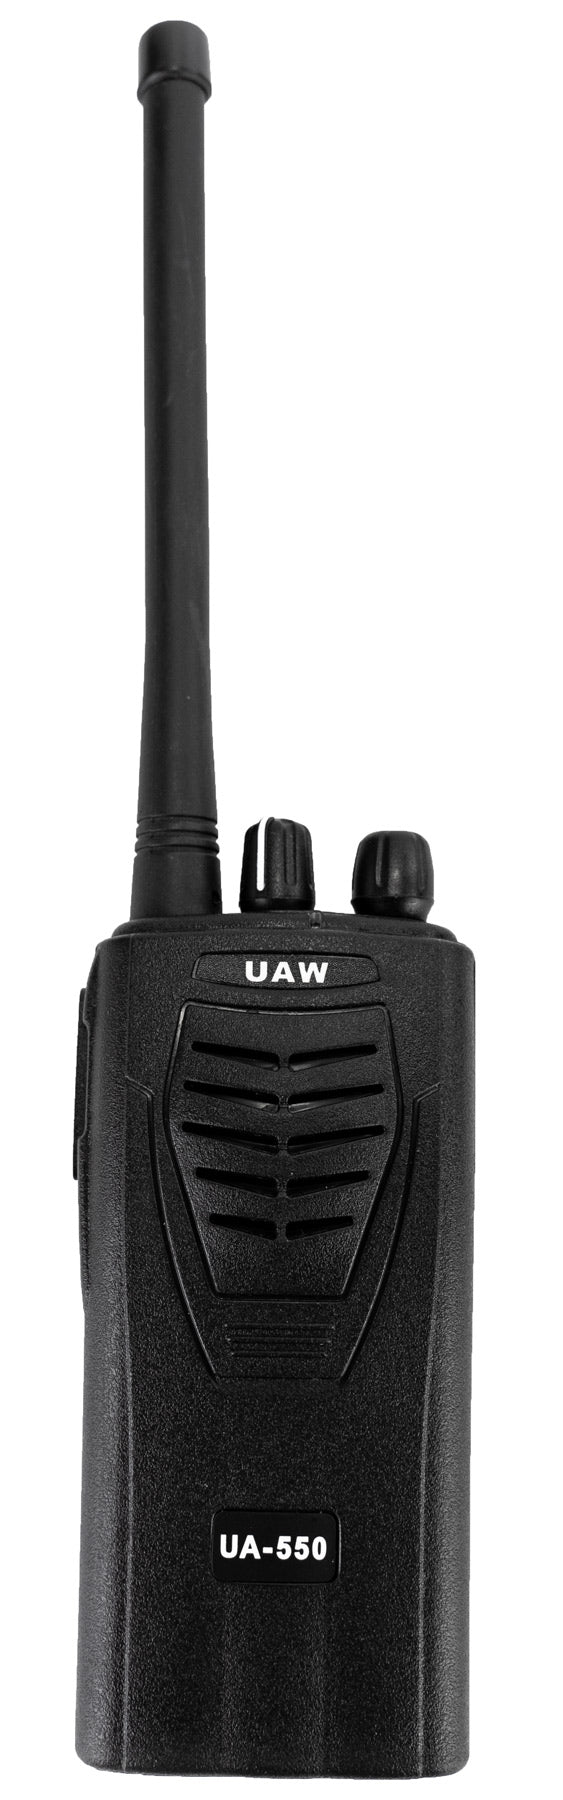 UA550 UHF Commercial Programmable Narrowband Radio with Li-ion Battery